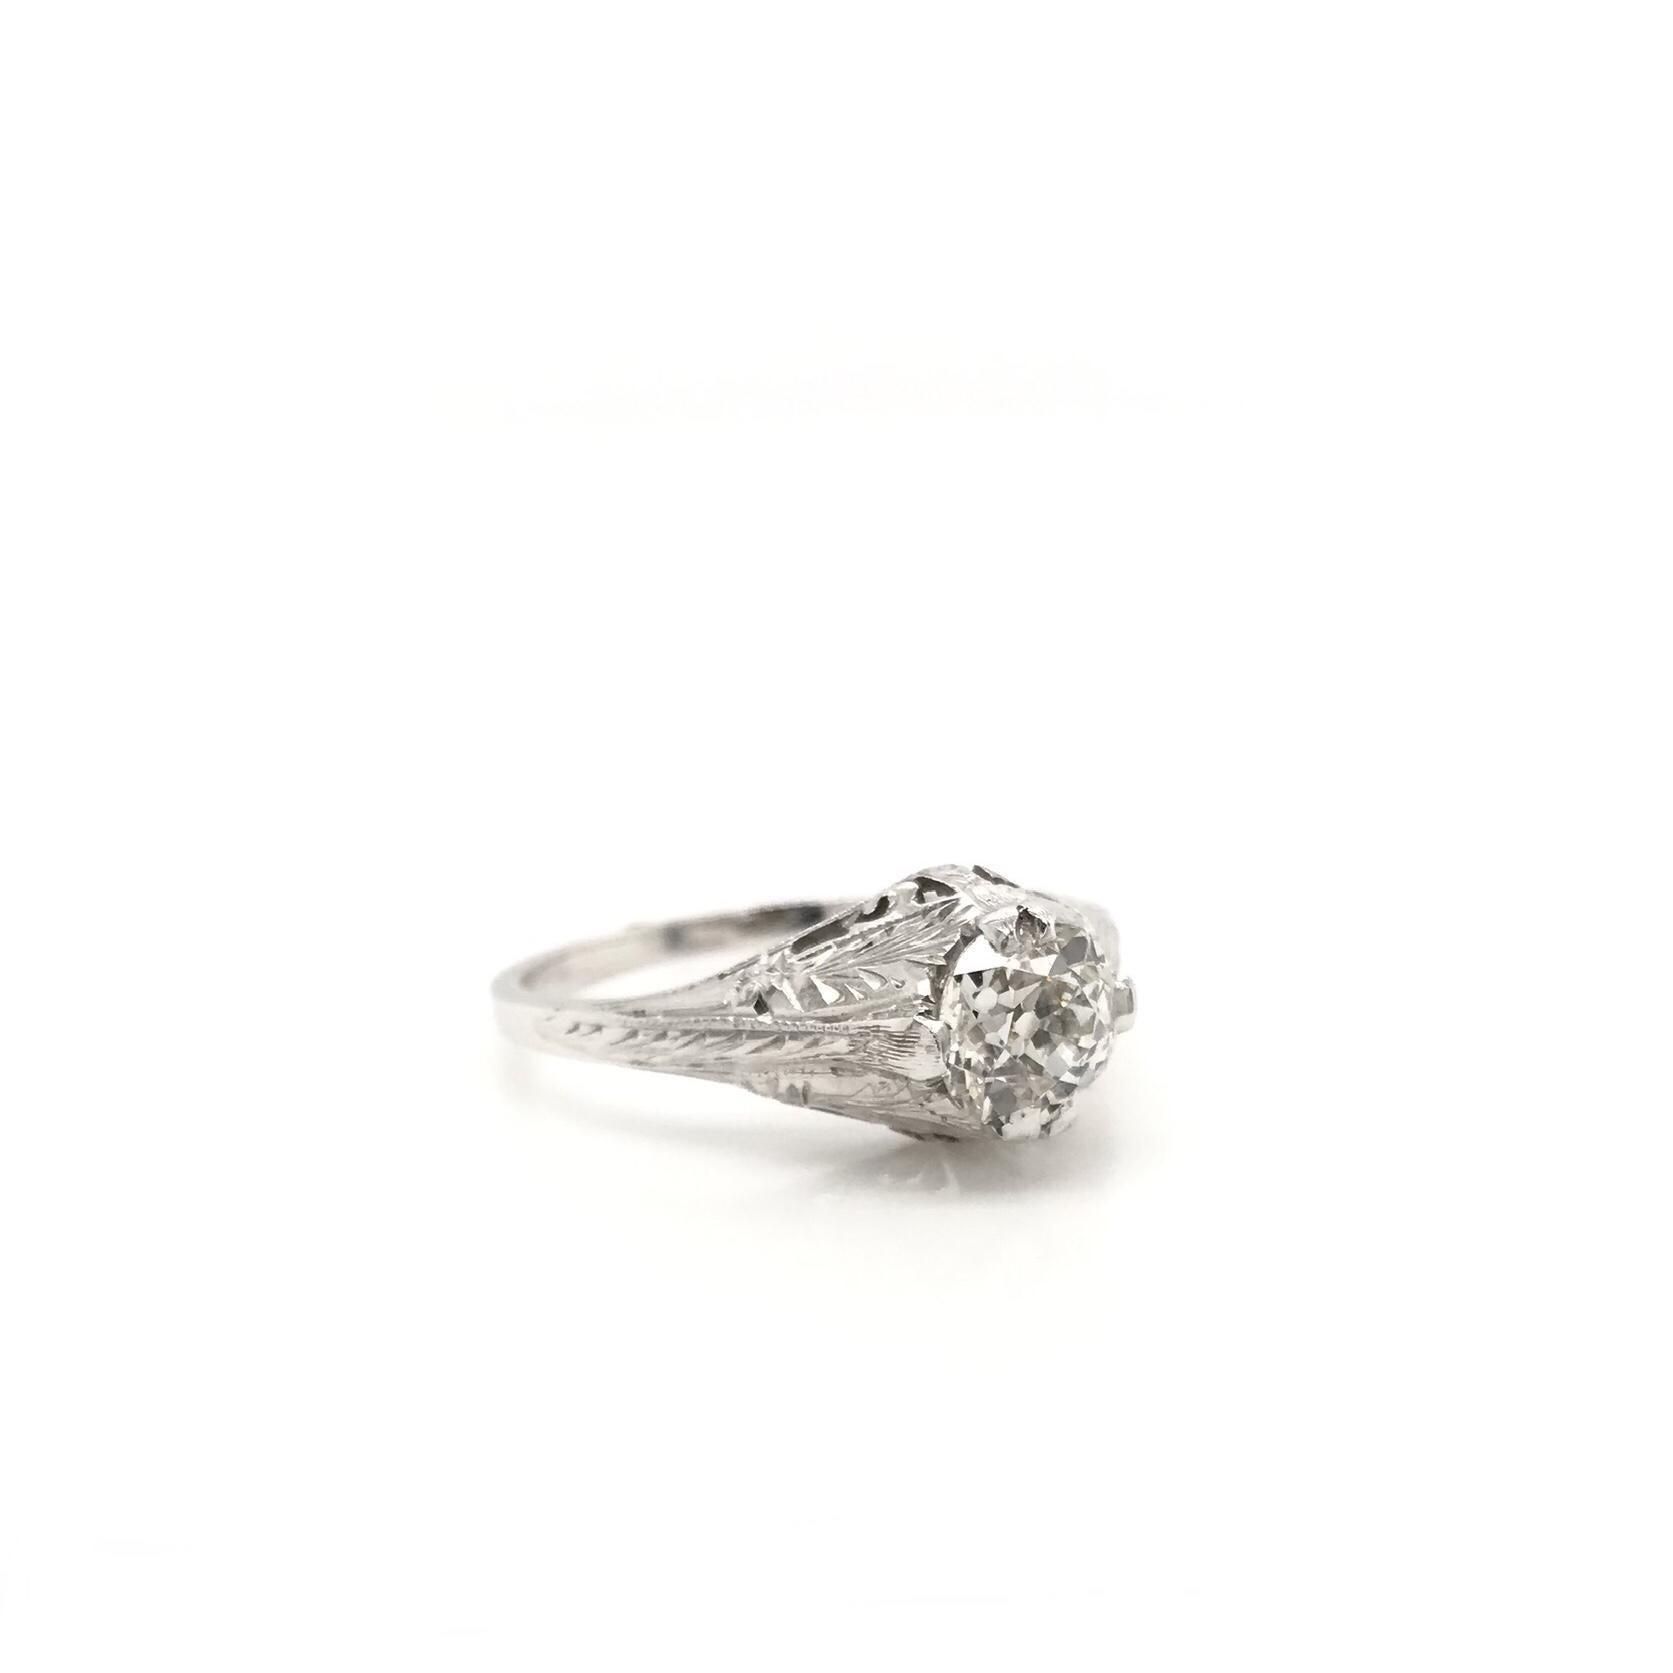 Antique Art Deco 0.71 Carat Diamond Solitaire Ring In Excellent Condition For Sale In Montgomery, AL